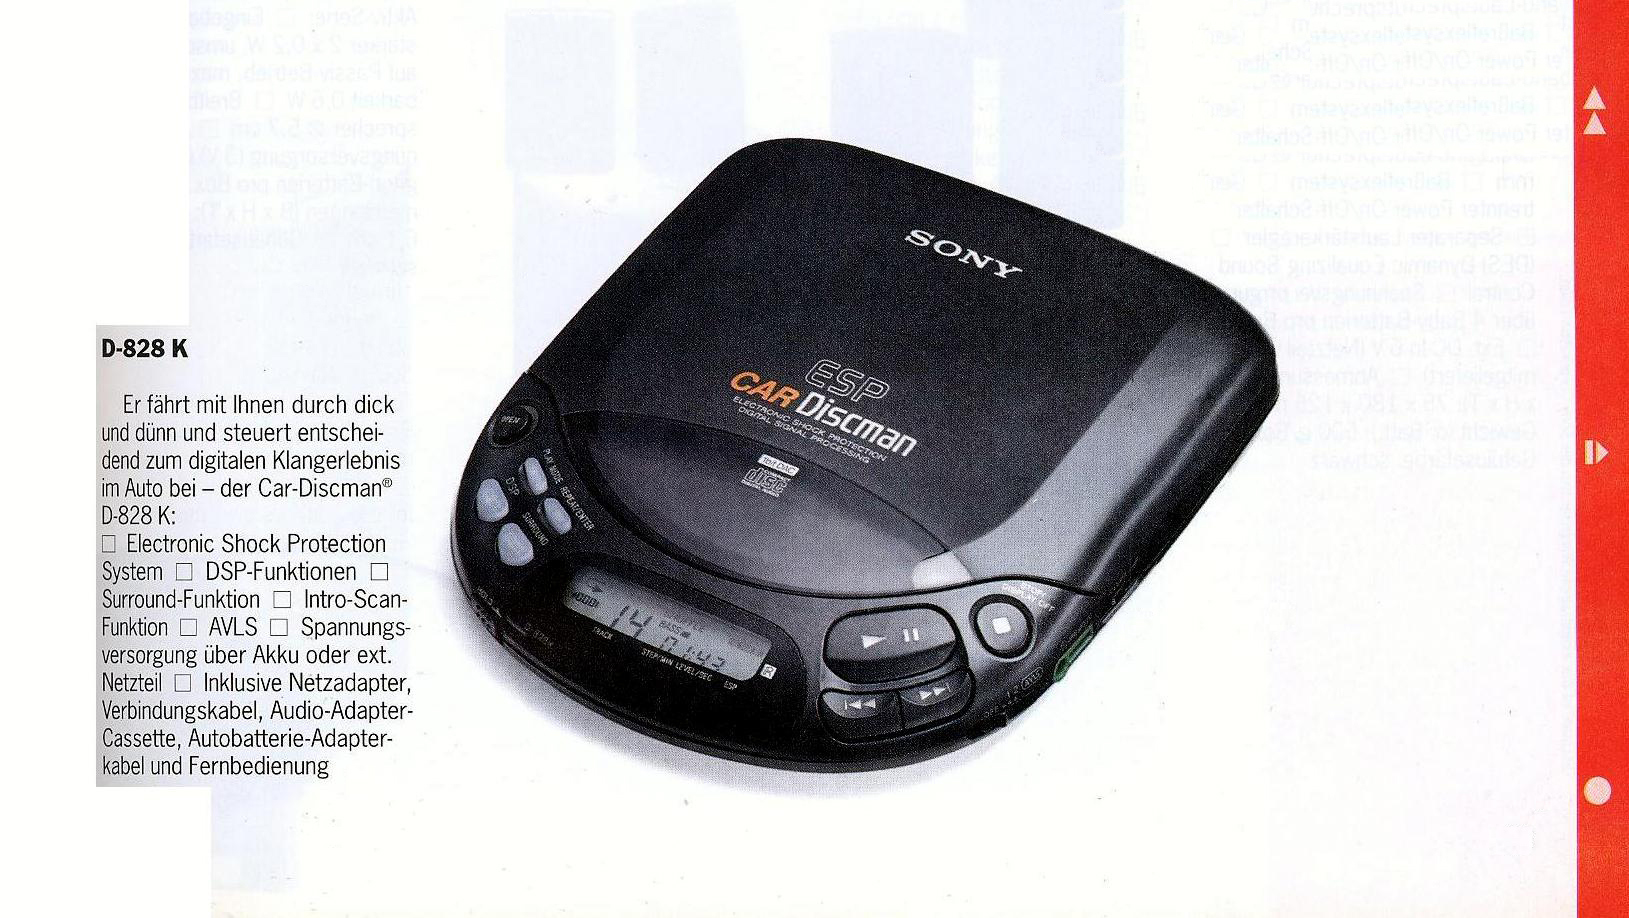 Sony D-828 K-Prospekt-1993.jpg